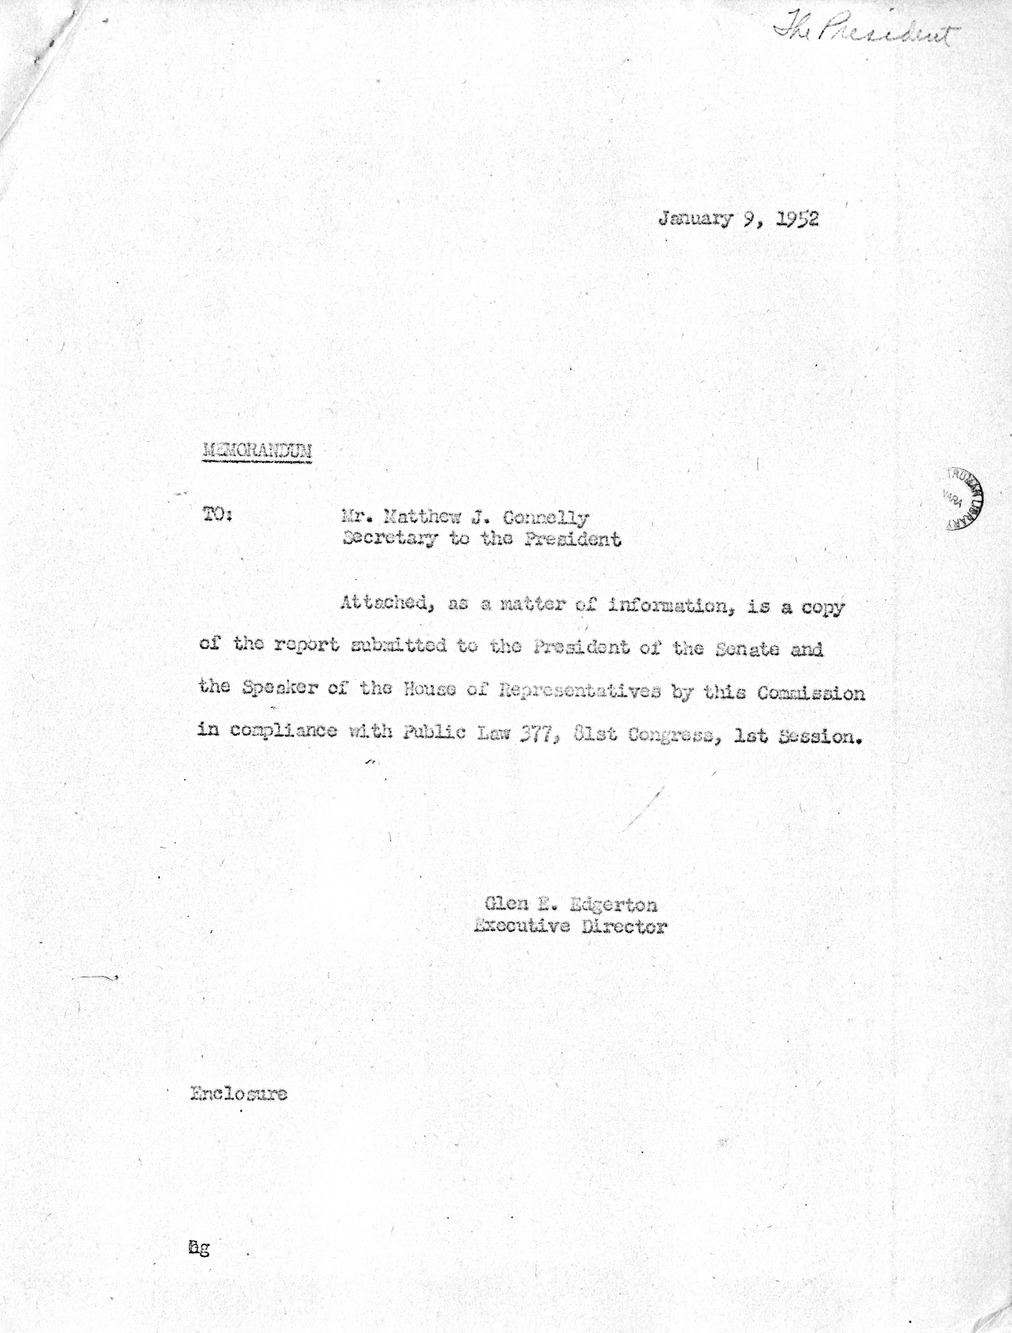 Memorandum from Major General Glen E. Edgerton to Mr. Matthew J. Connelly, with Attachment